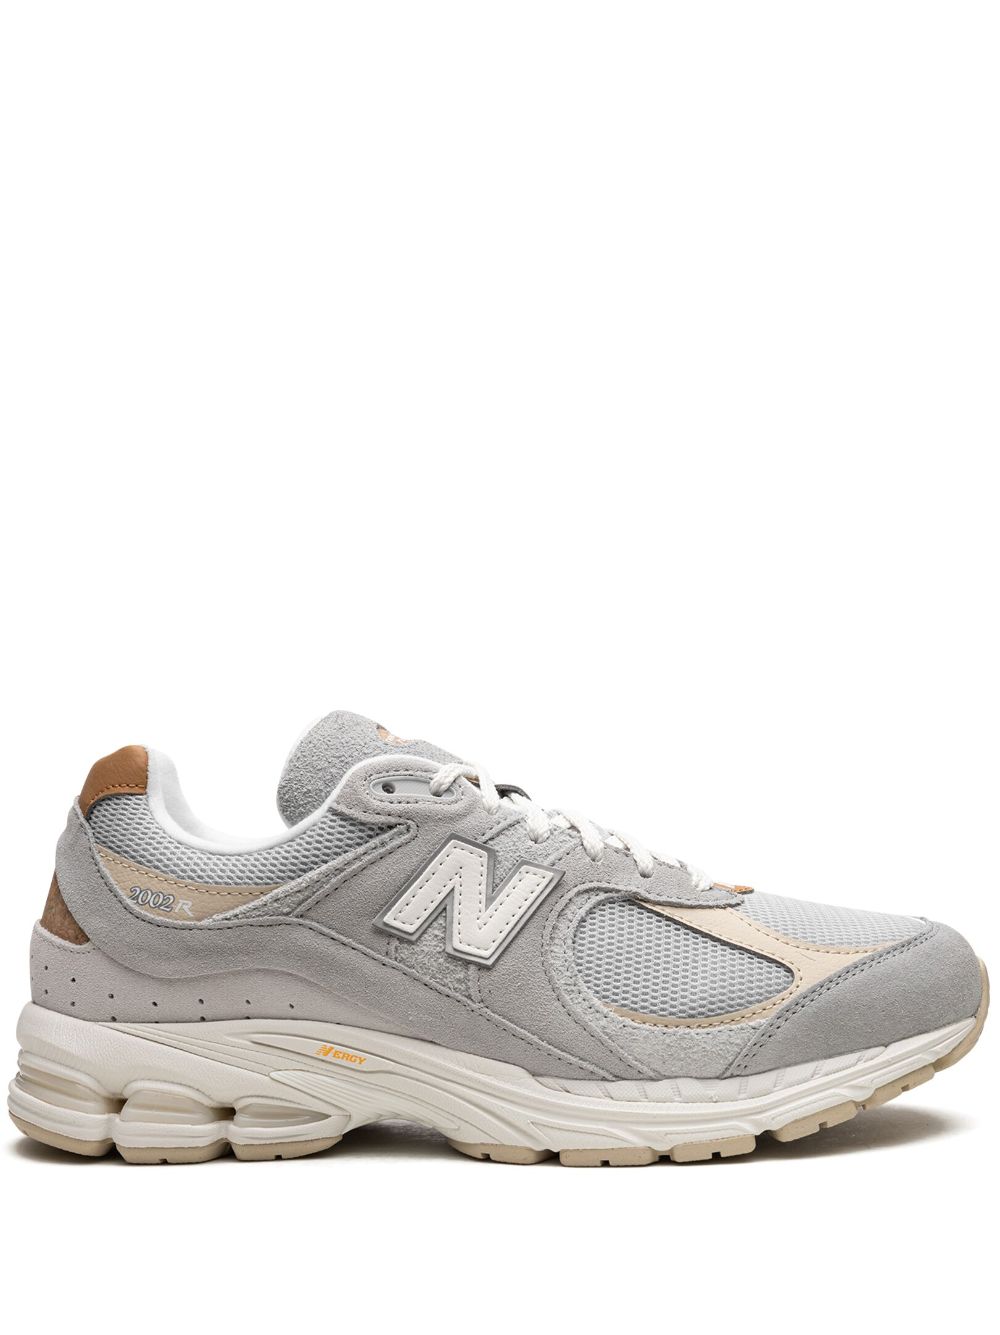 New Balance 2002R "Concrete" sneakers - Grey